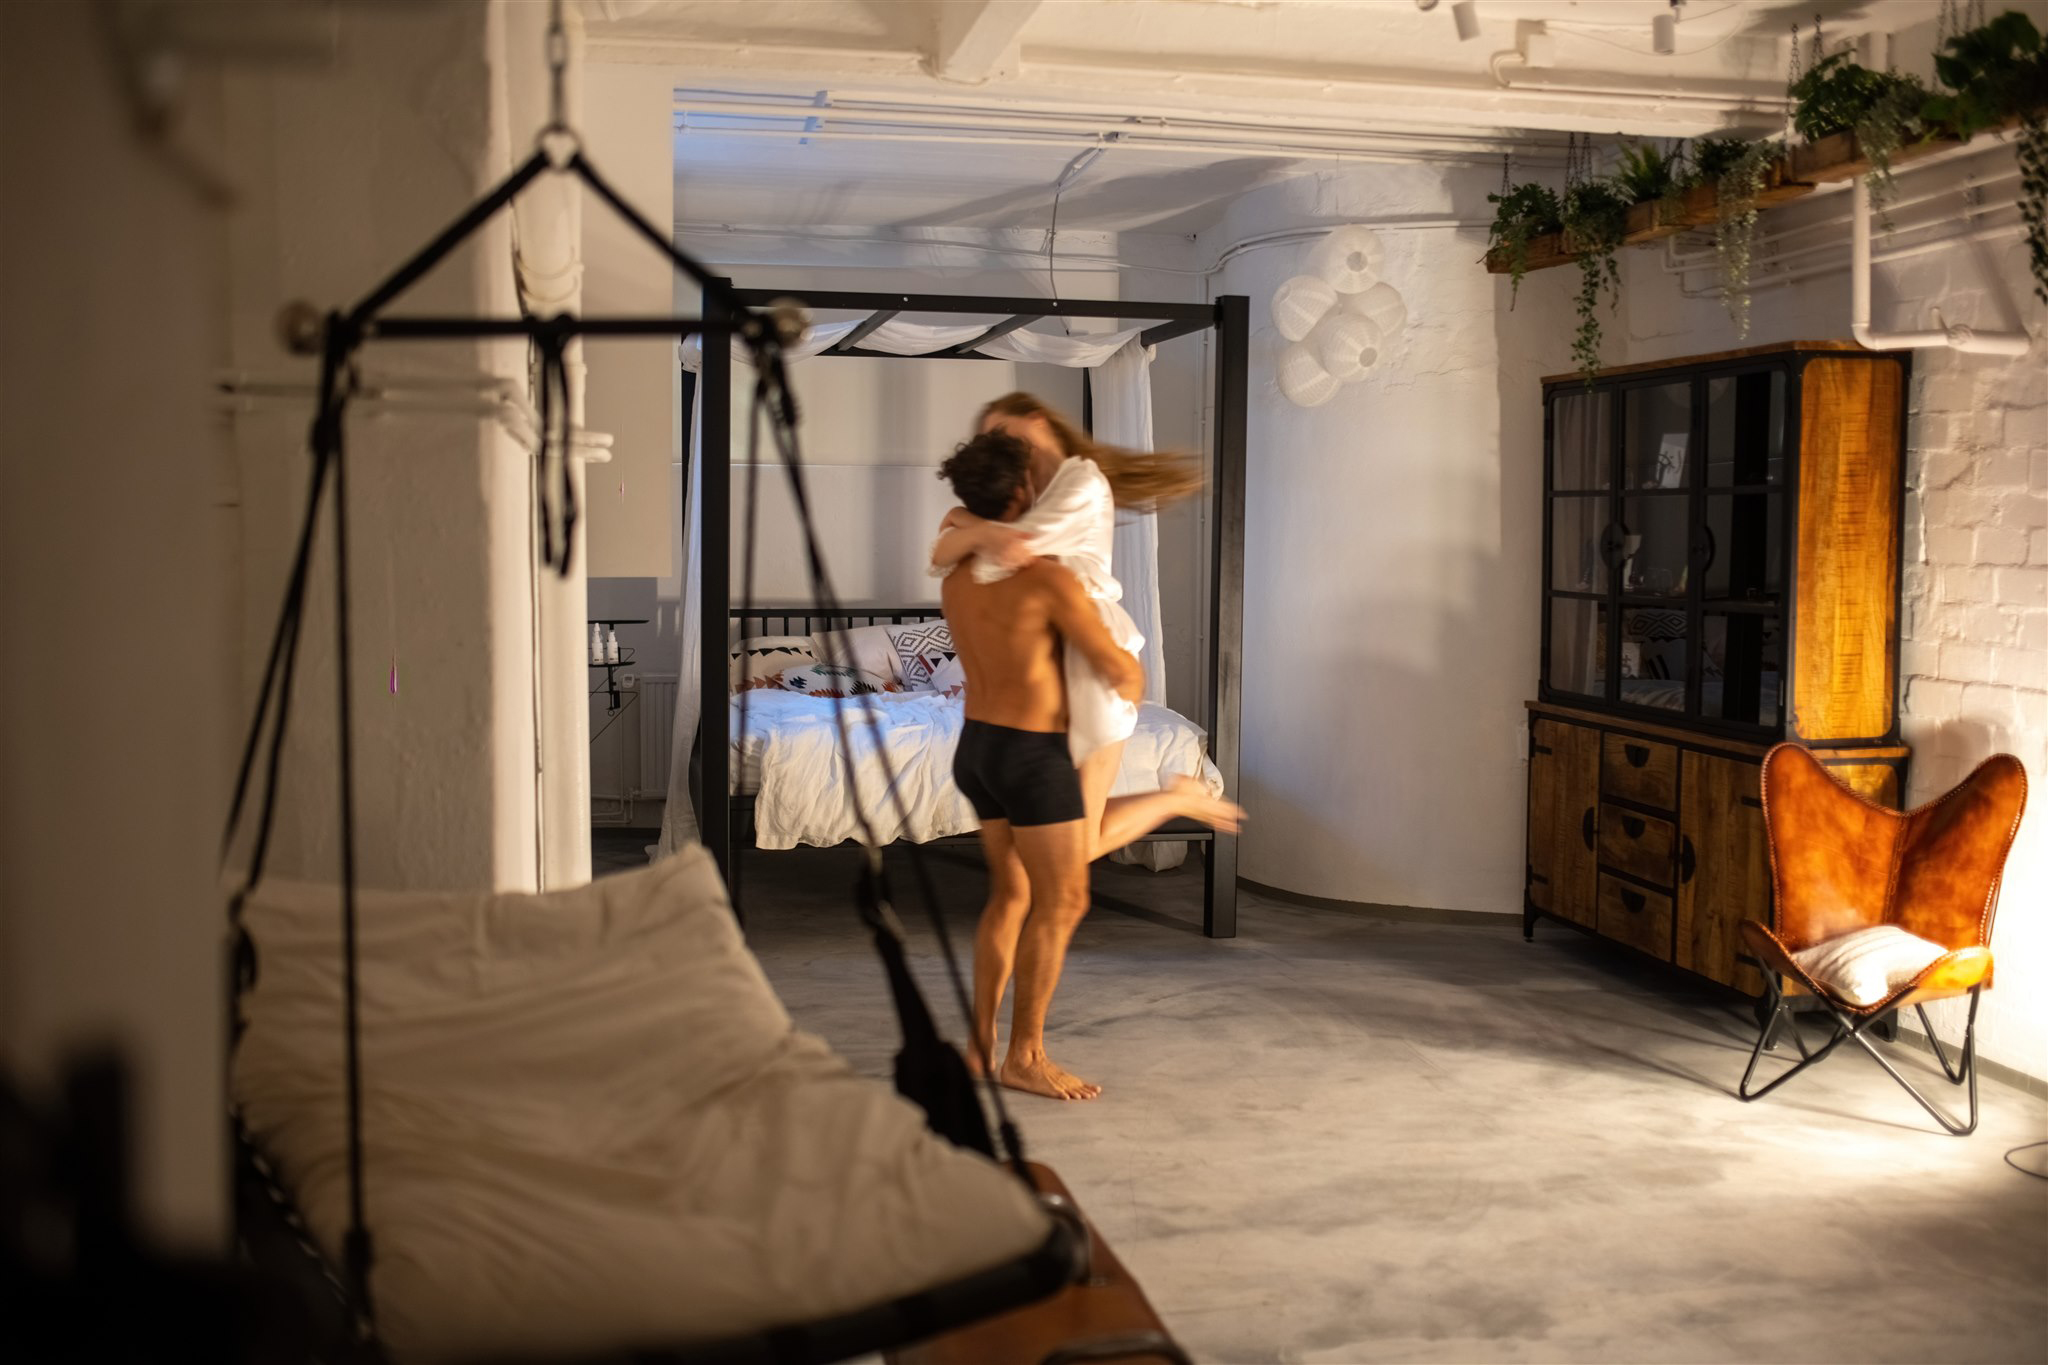 room8 Hamburg - Sex hotel or couple retreat? picture image